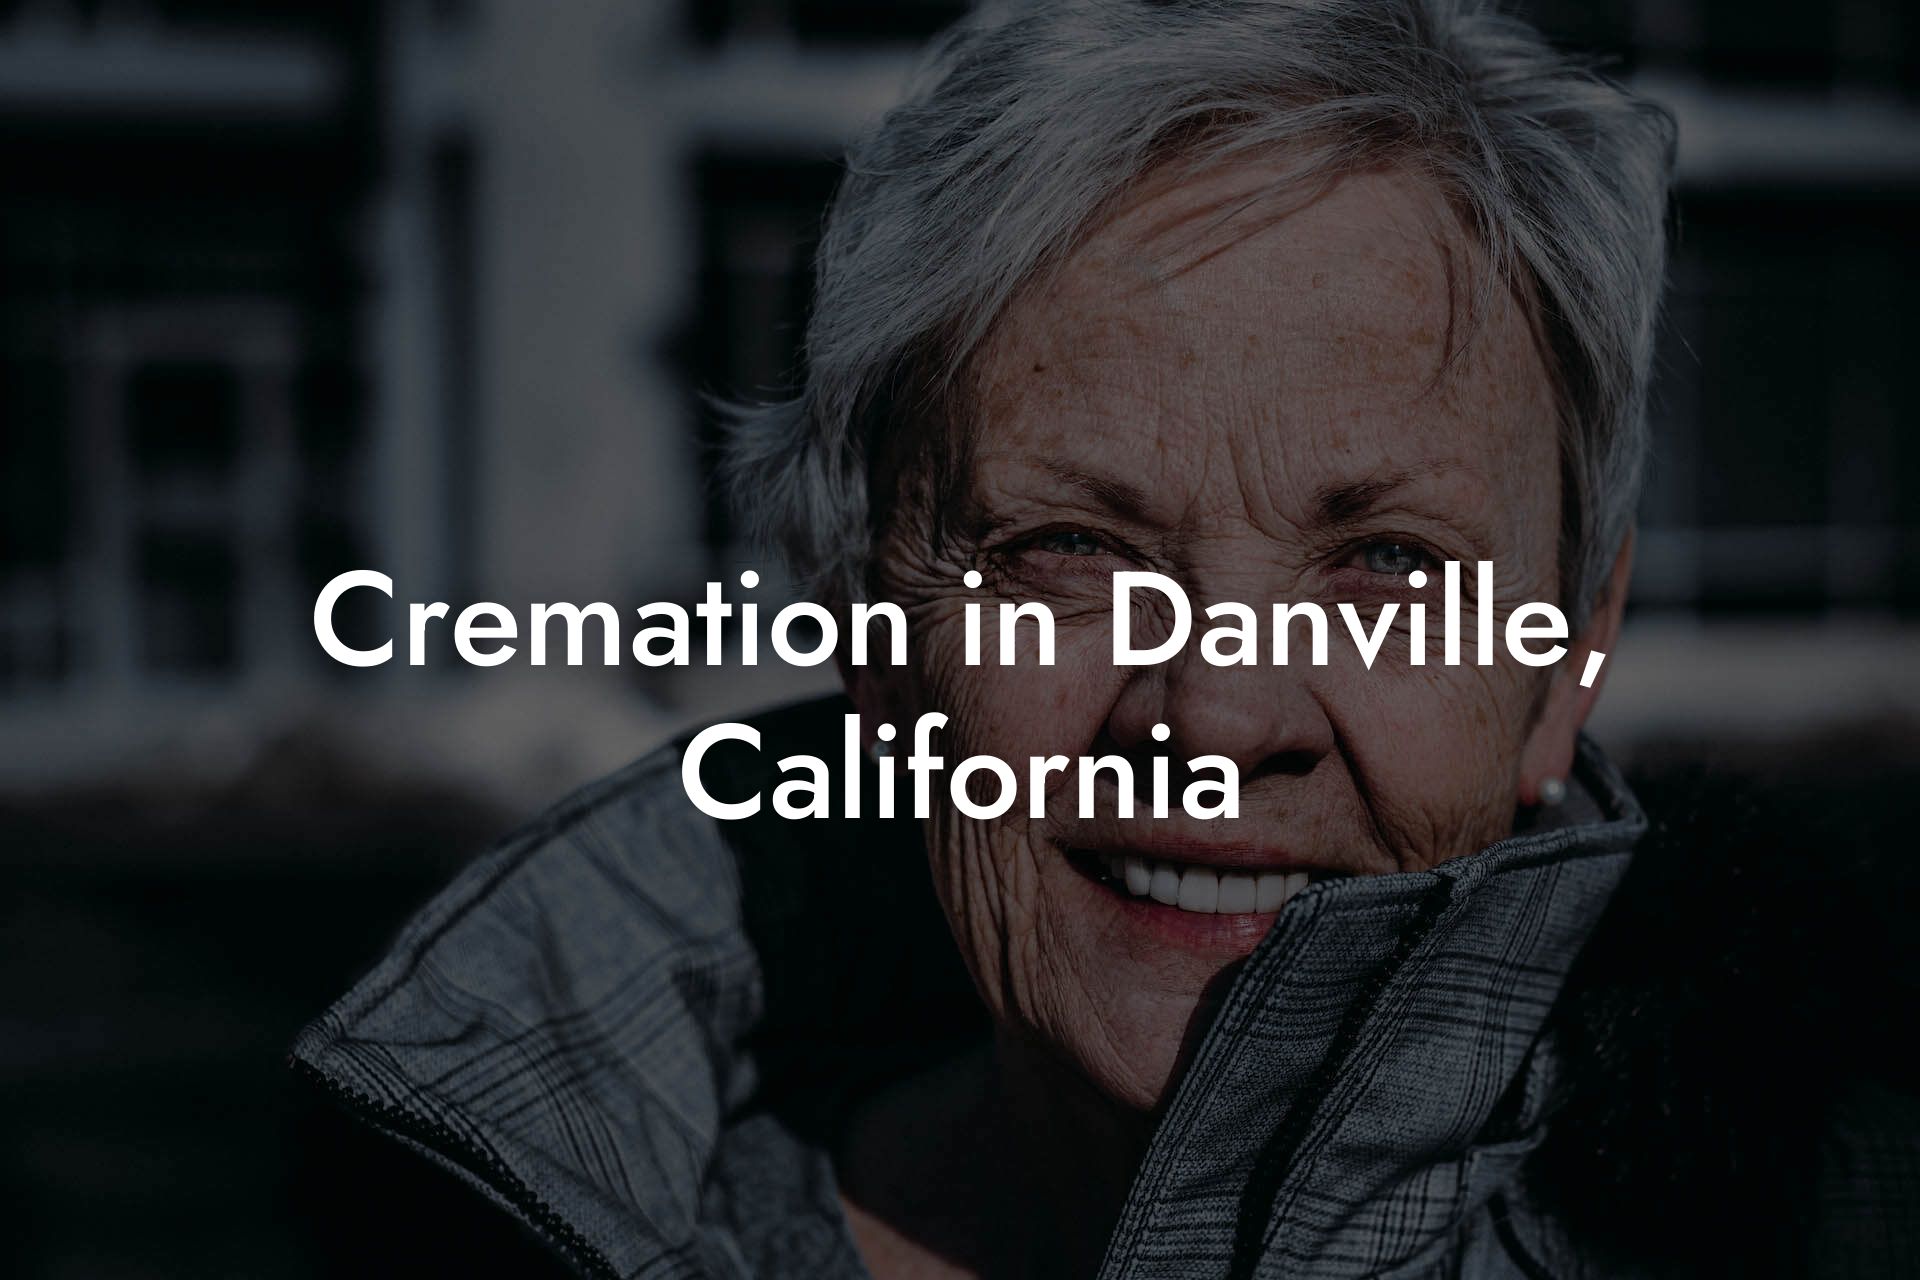 Cremation in Danville, California